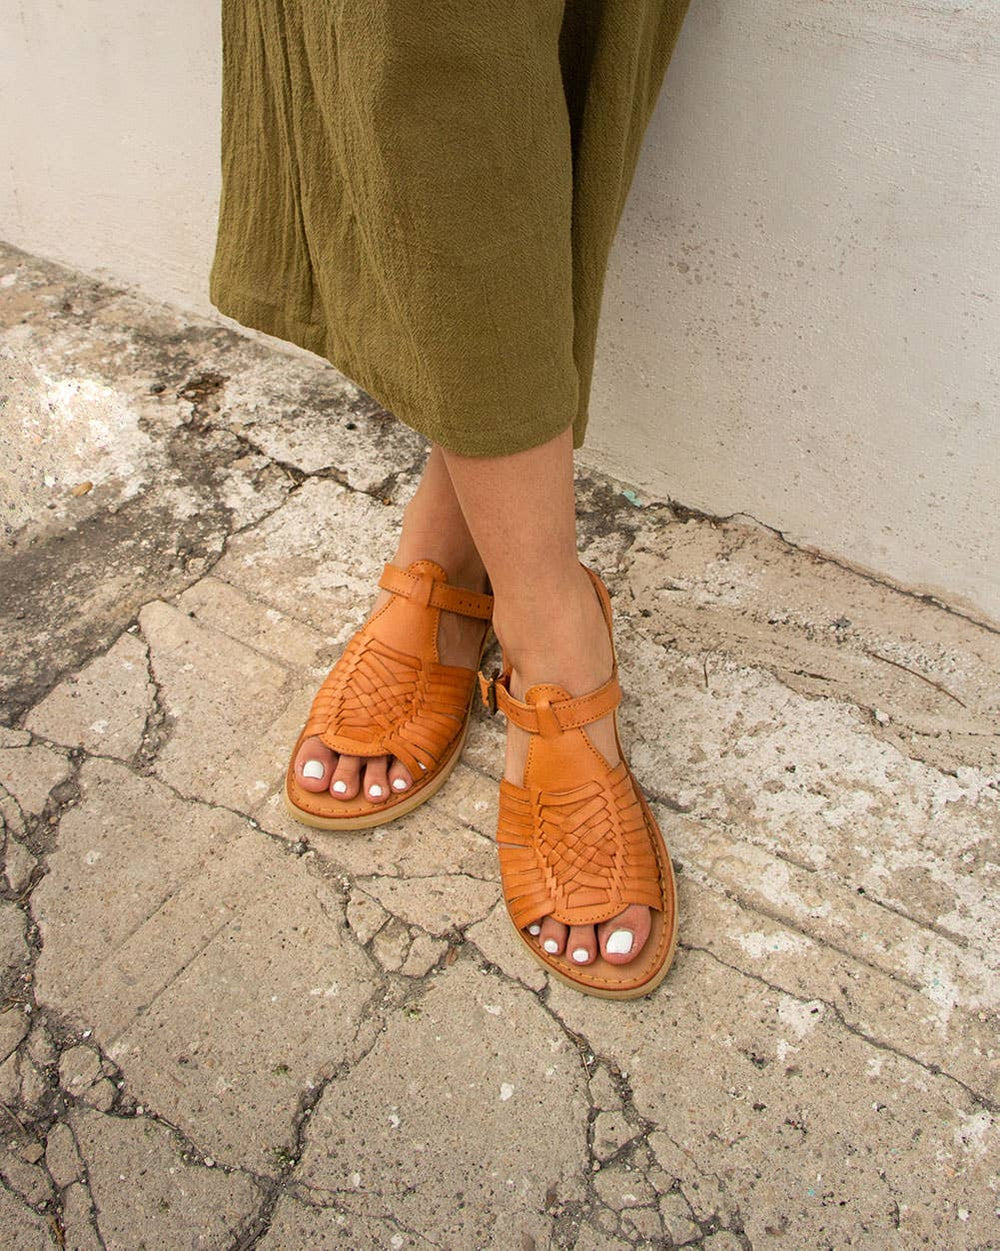 Mexas Schuhe 37 AZTECA - Leather sandal for women in camel color. Comfortable huarache sandal.